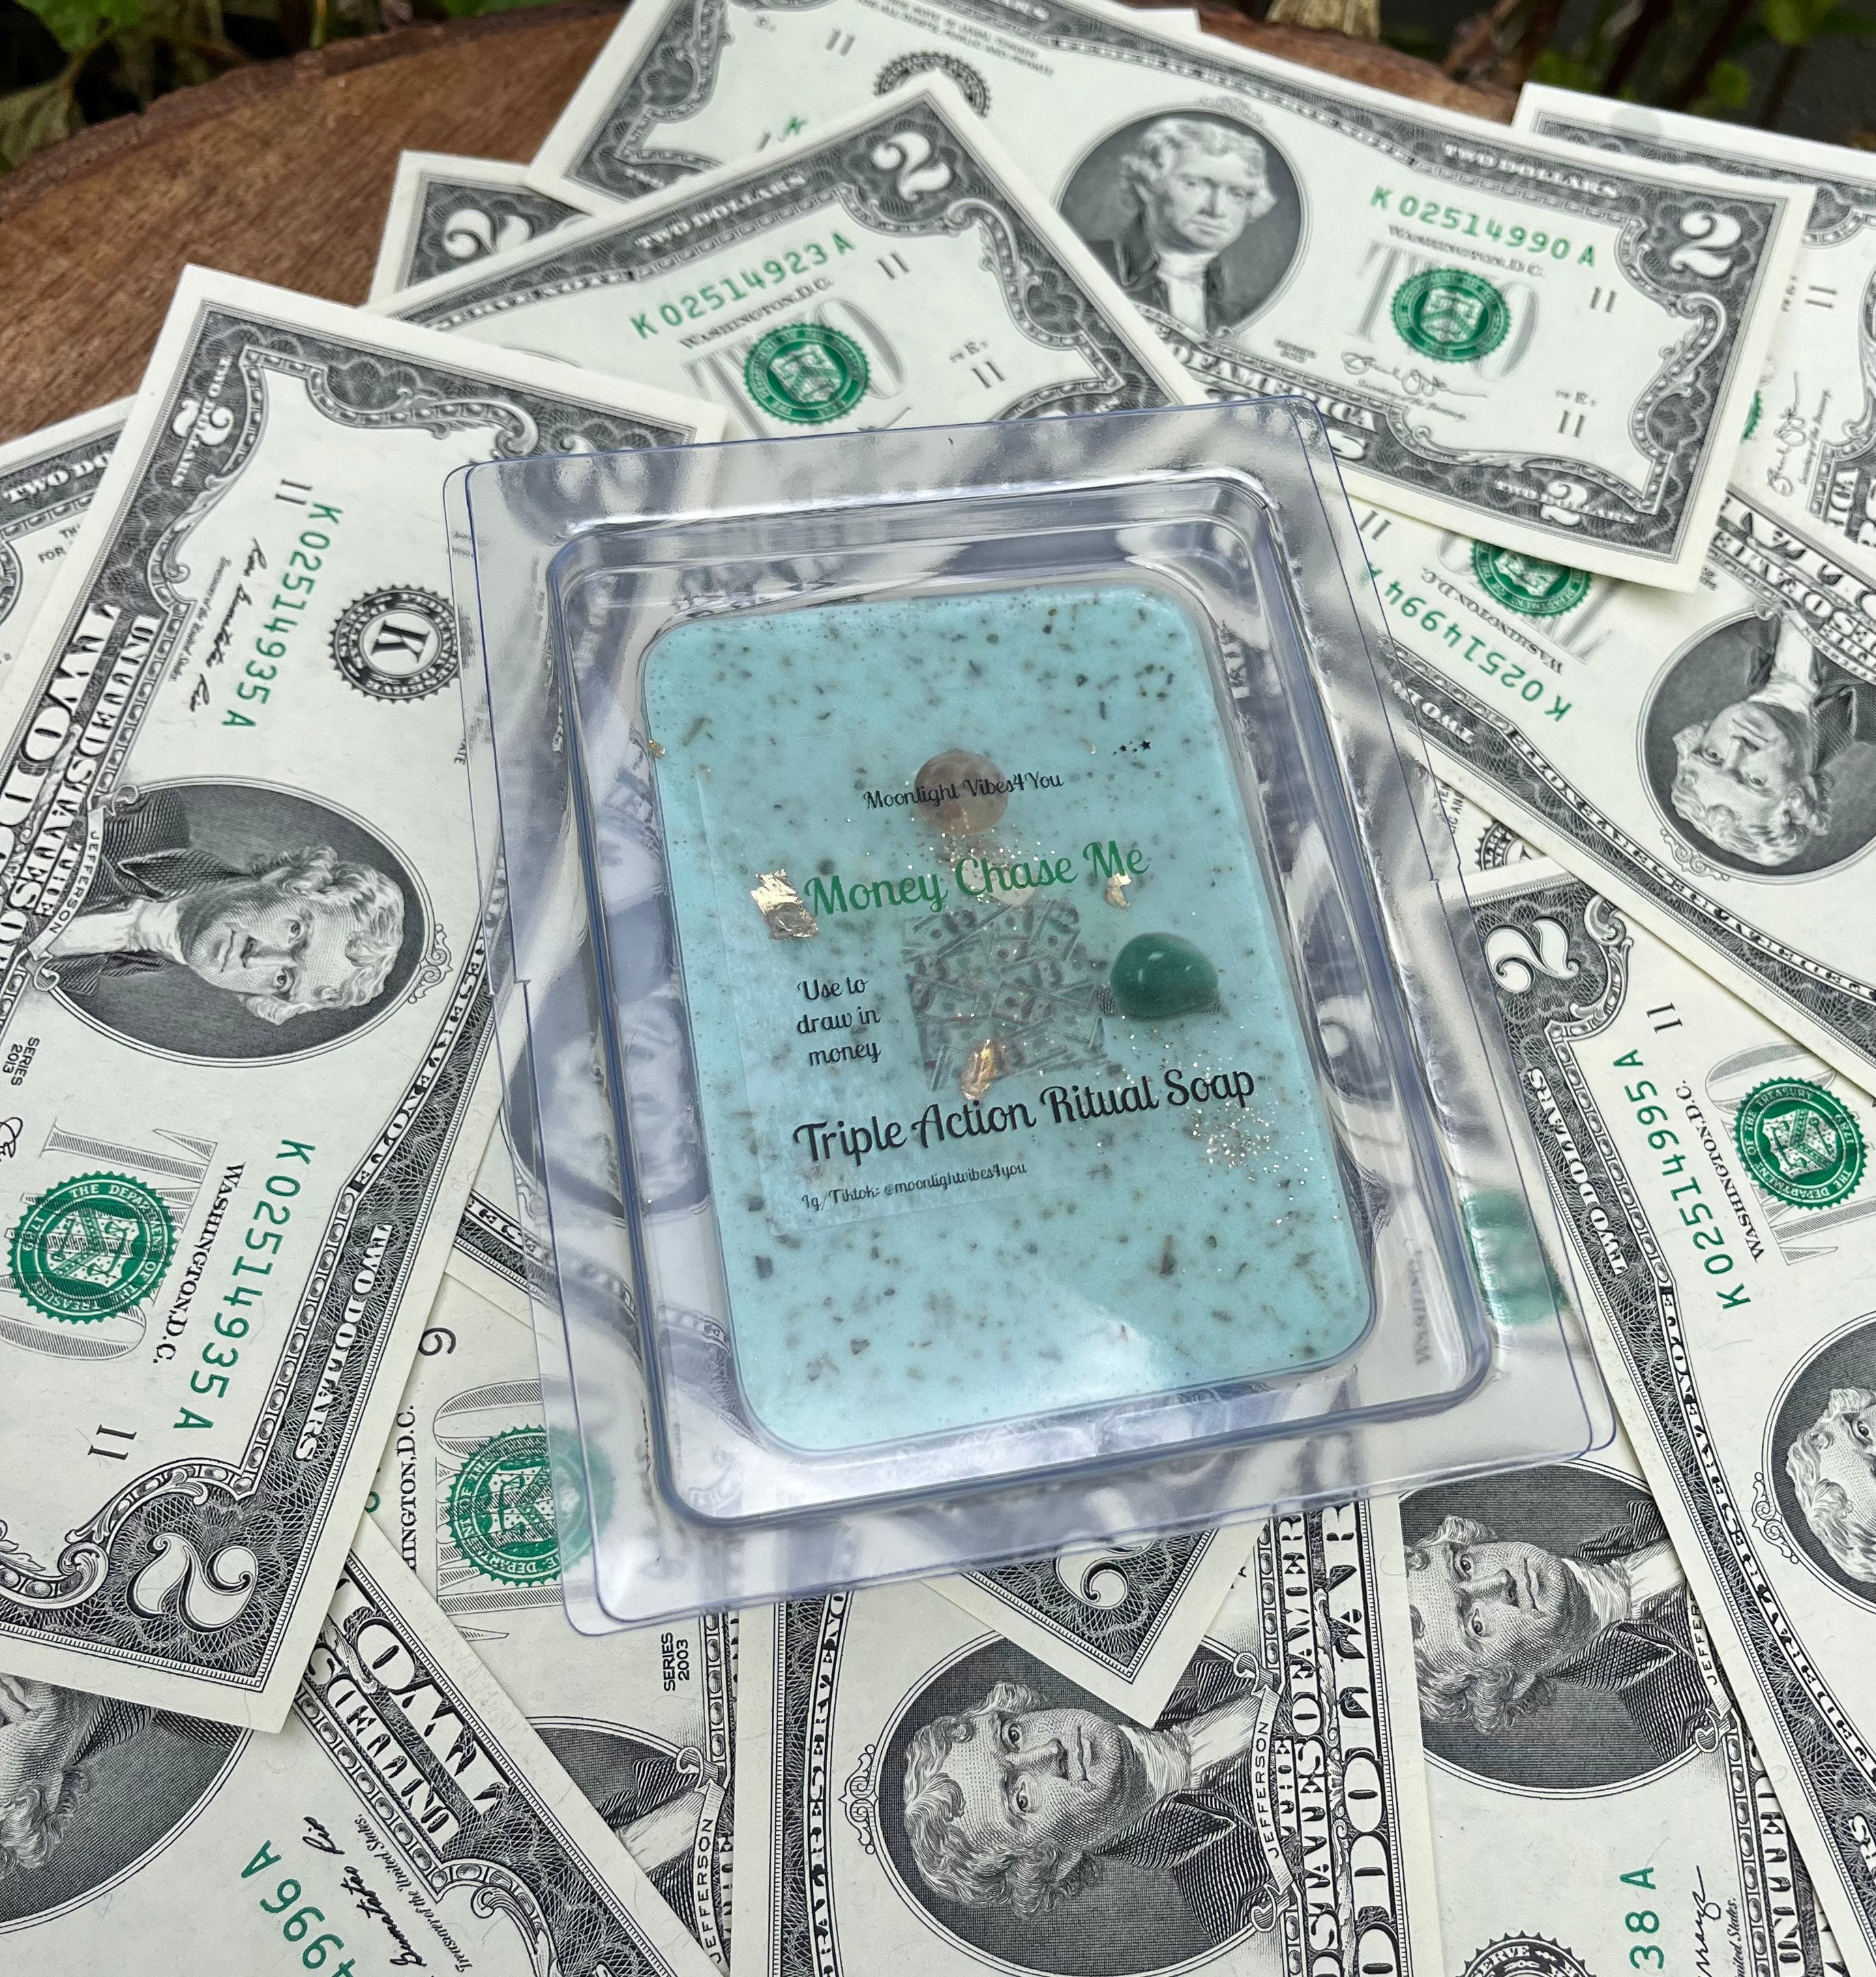 Mystery Money Soap! (Real Cash Inside!) 